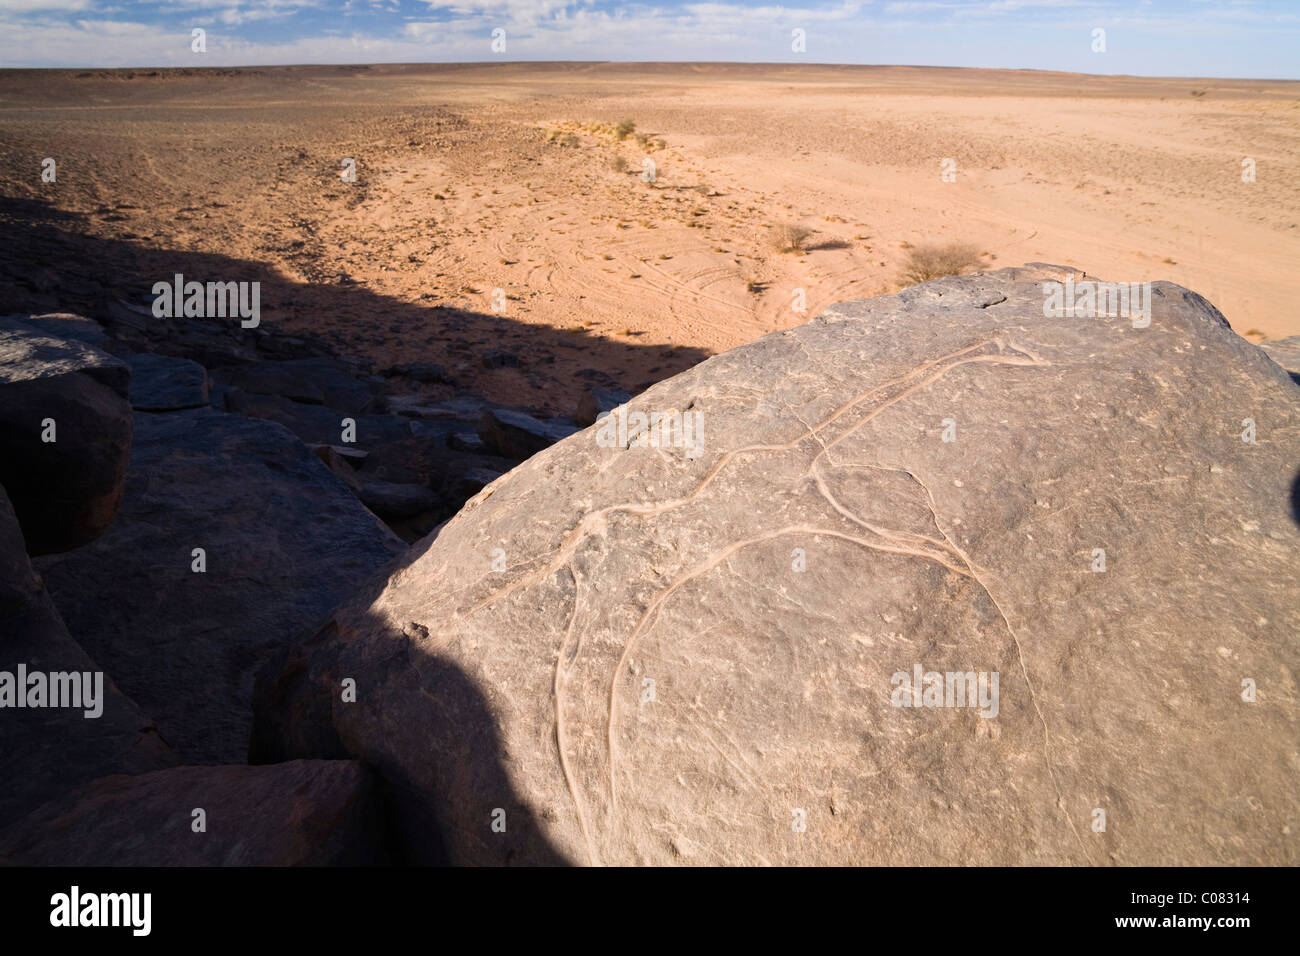 Stone engravings in stone desert, Libya, Sahara, North Africa Stock Photo